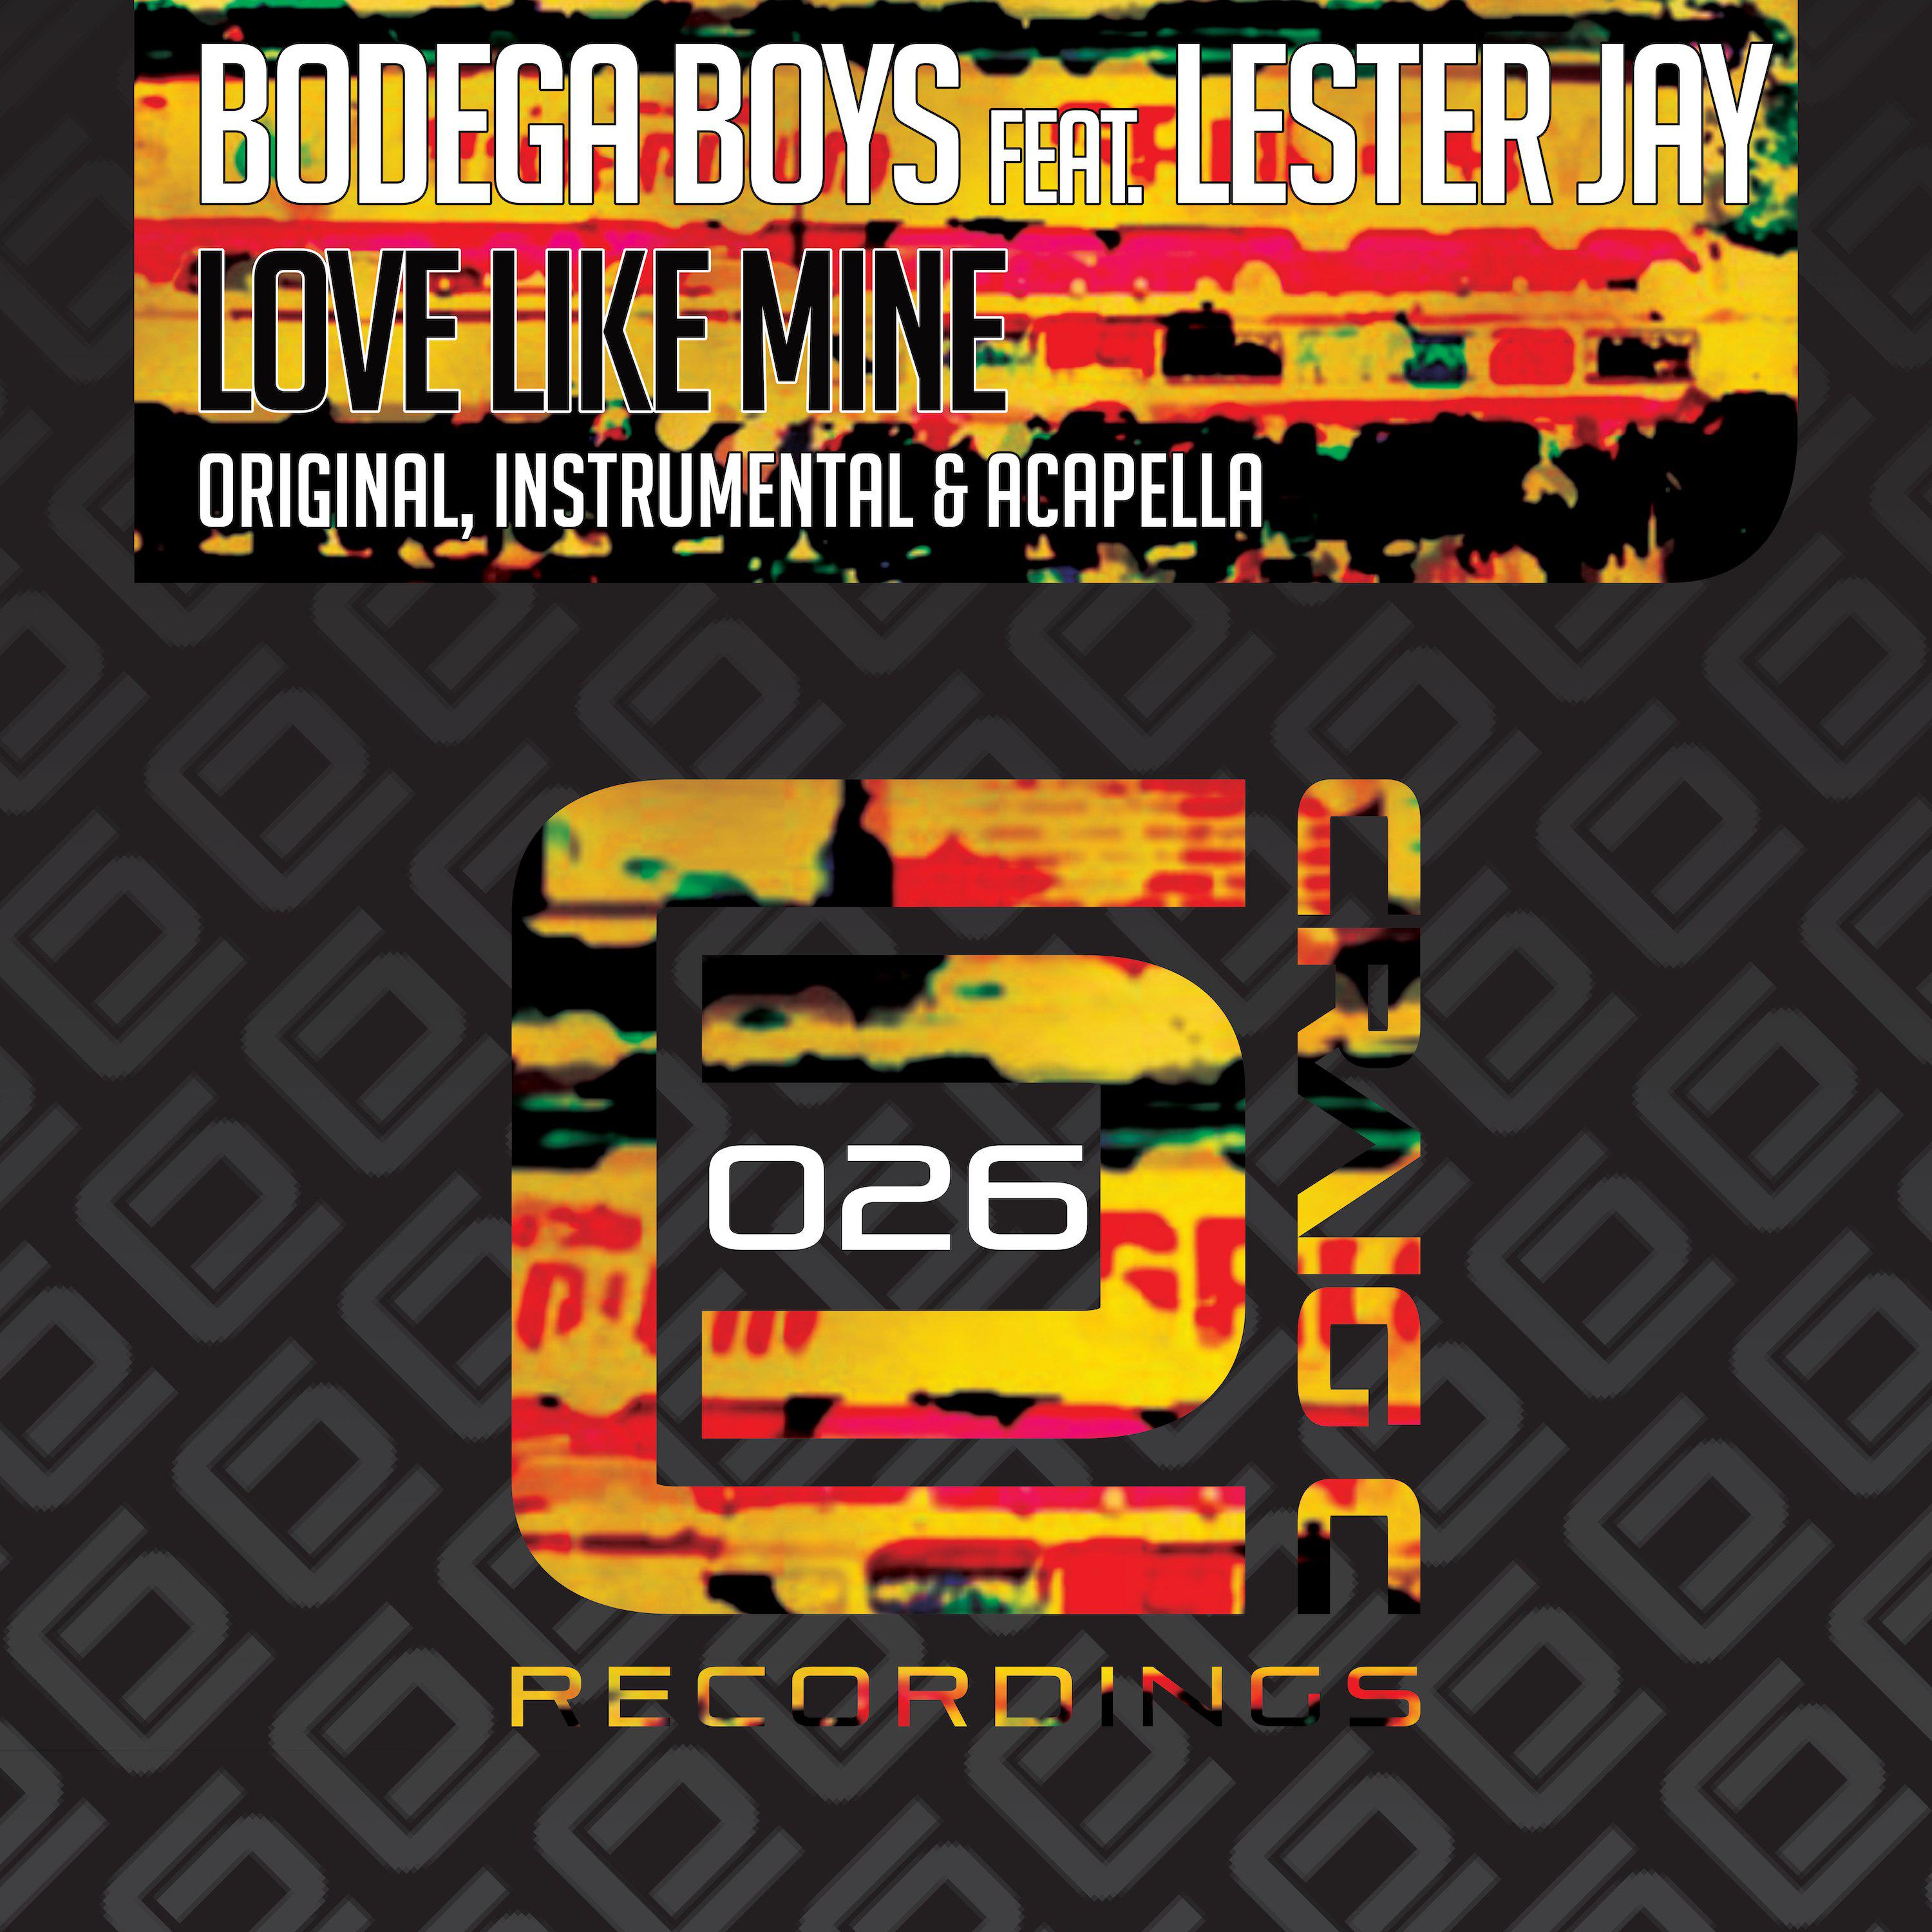 Bodega boys - Love Like Mine (Instrumental Mix)